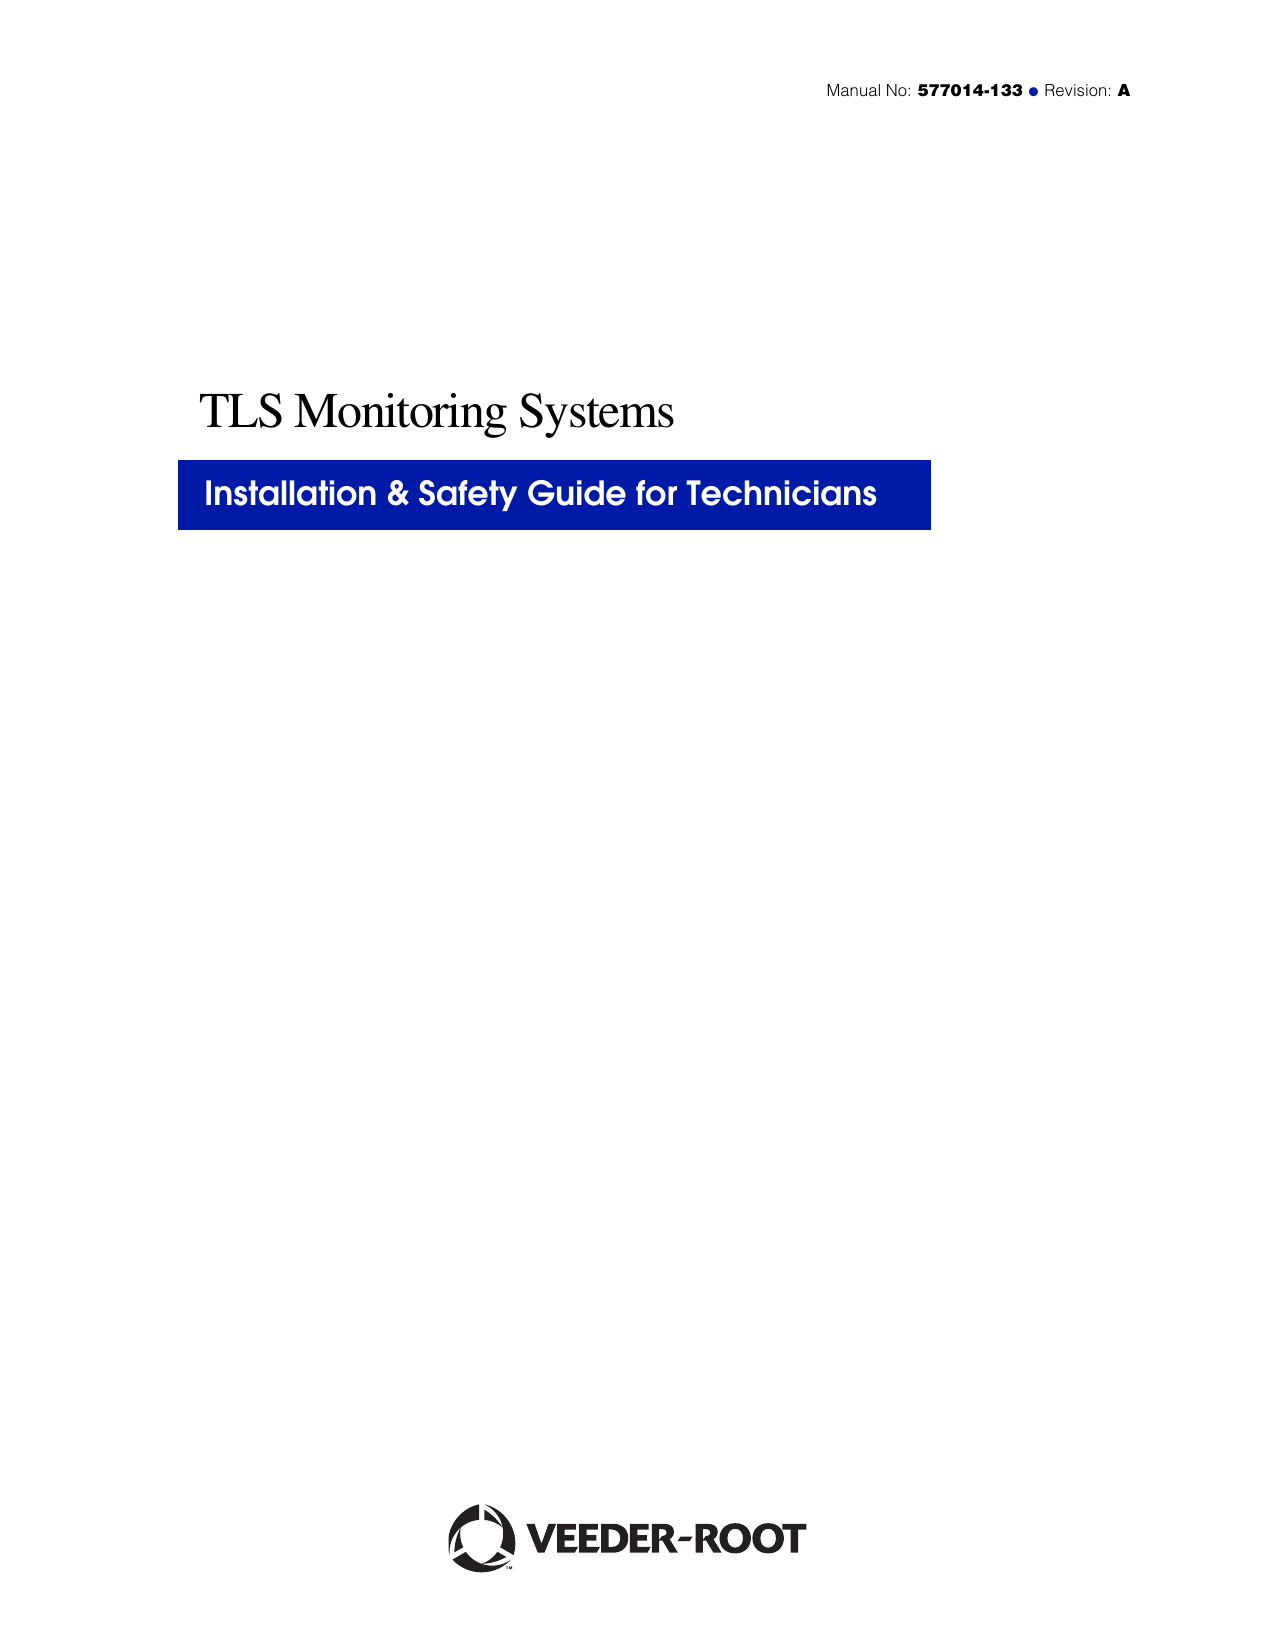 TLS Monitoring Systems | Manualzz